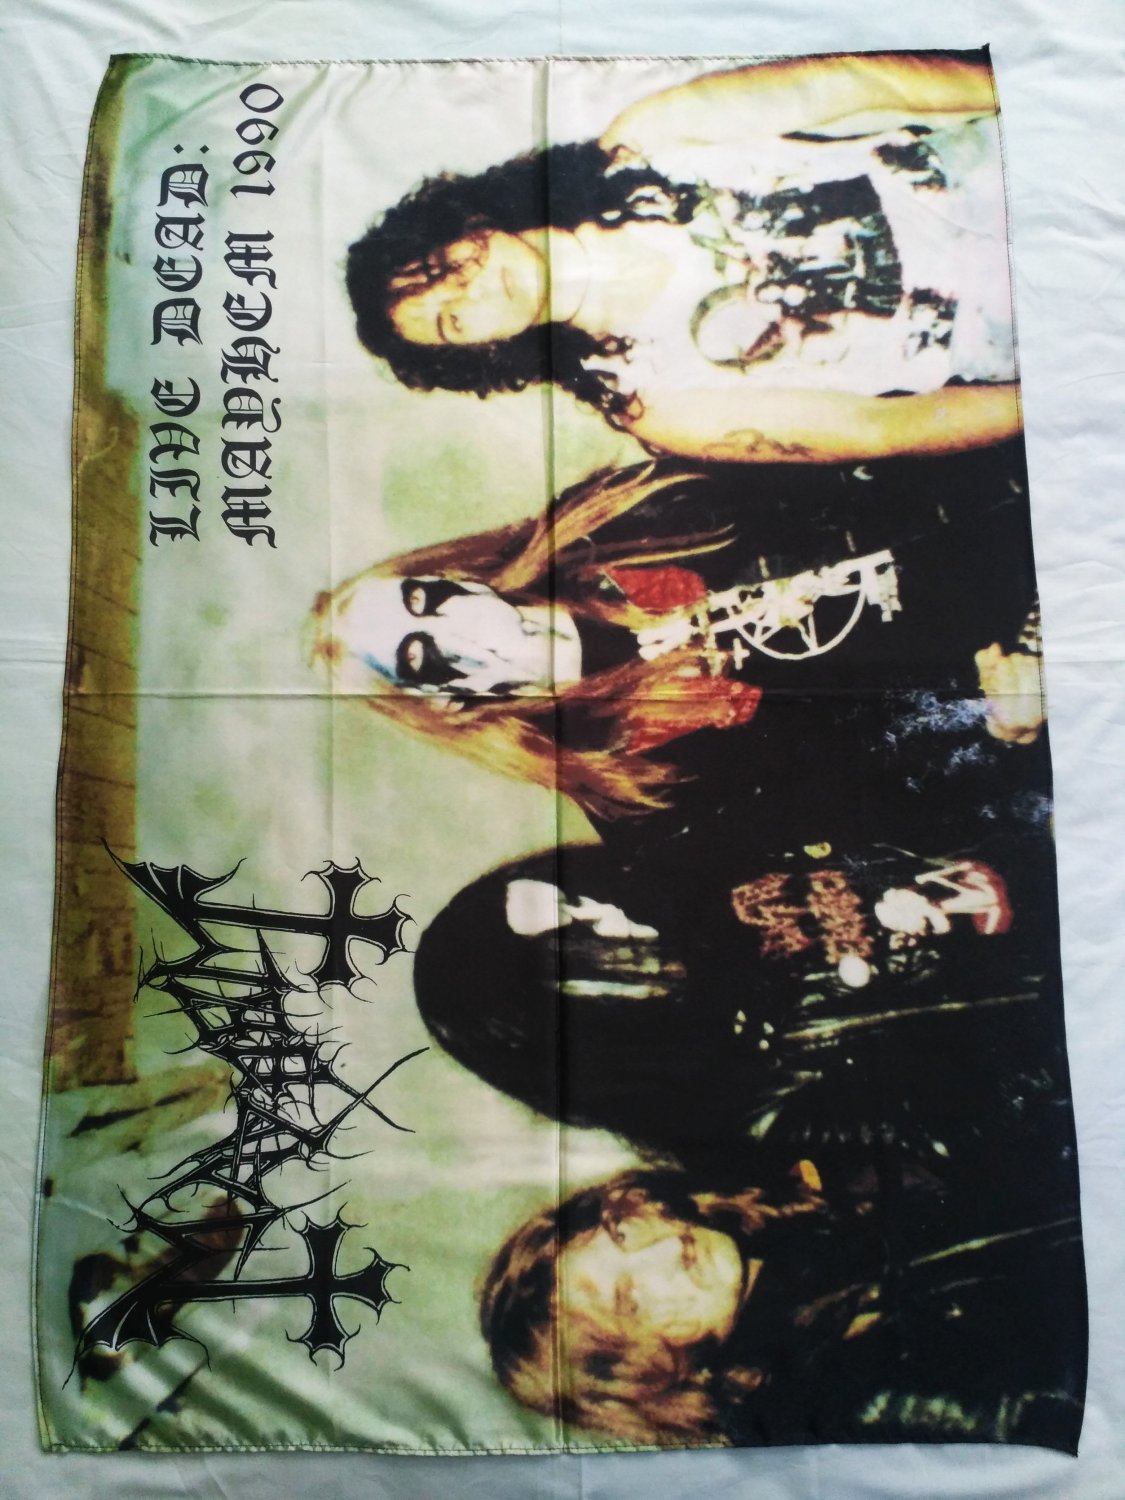 MAYHEM - Live dead: Mayhem 1990 FLAG Heavy death metal cloth poster